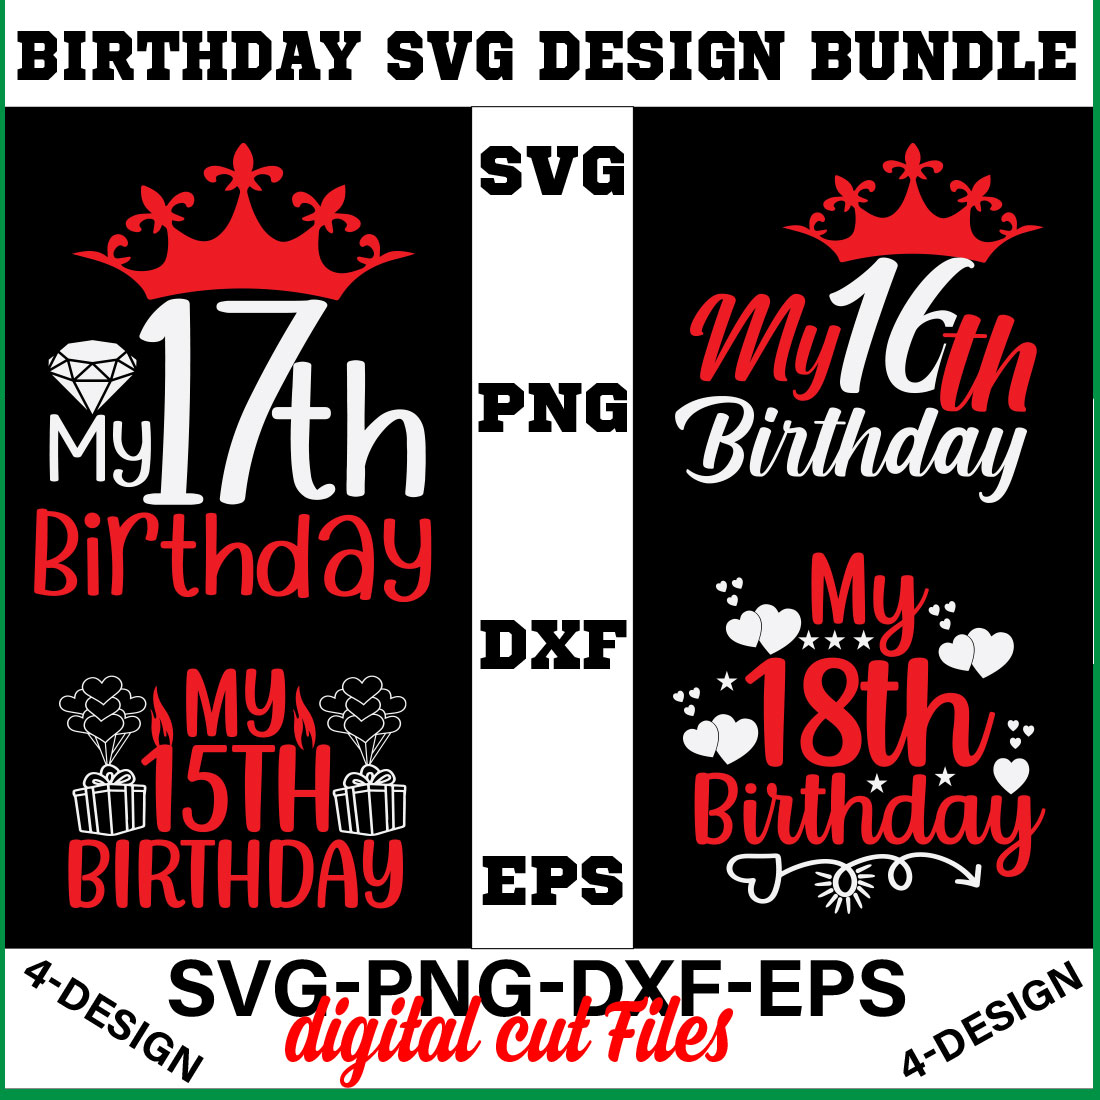 birthday svg design bundle Happy birthday svg bundle hand lettered birthday svg birthday party svg Volume-28 cover image.